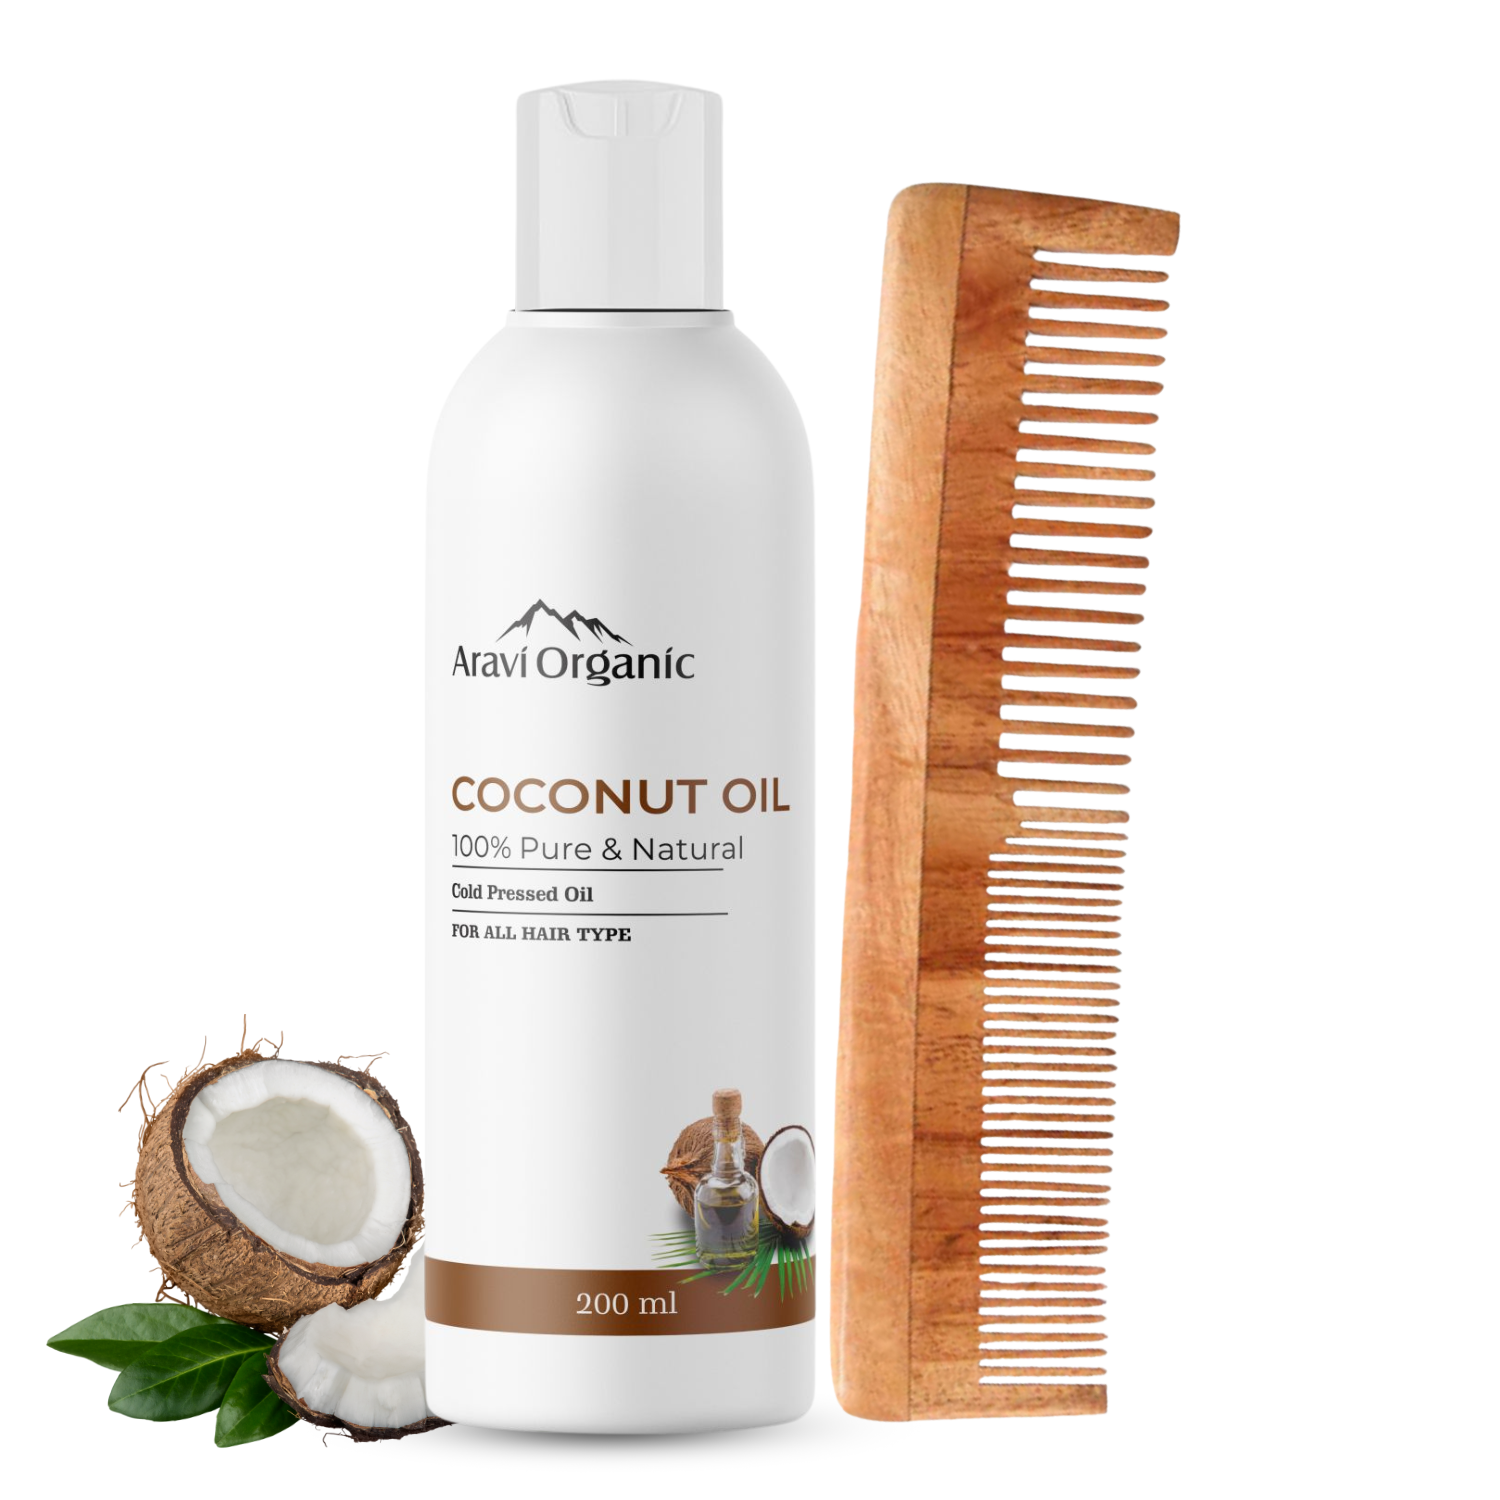 Aravi Organic 100% Pure Coconut Oil with Wood Comb.